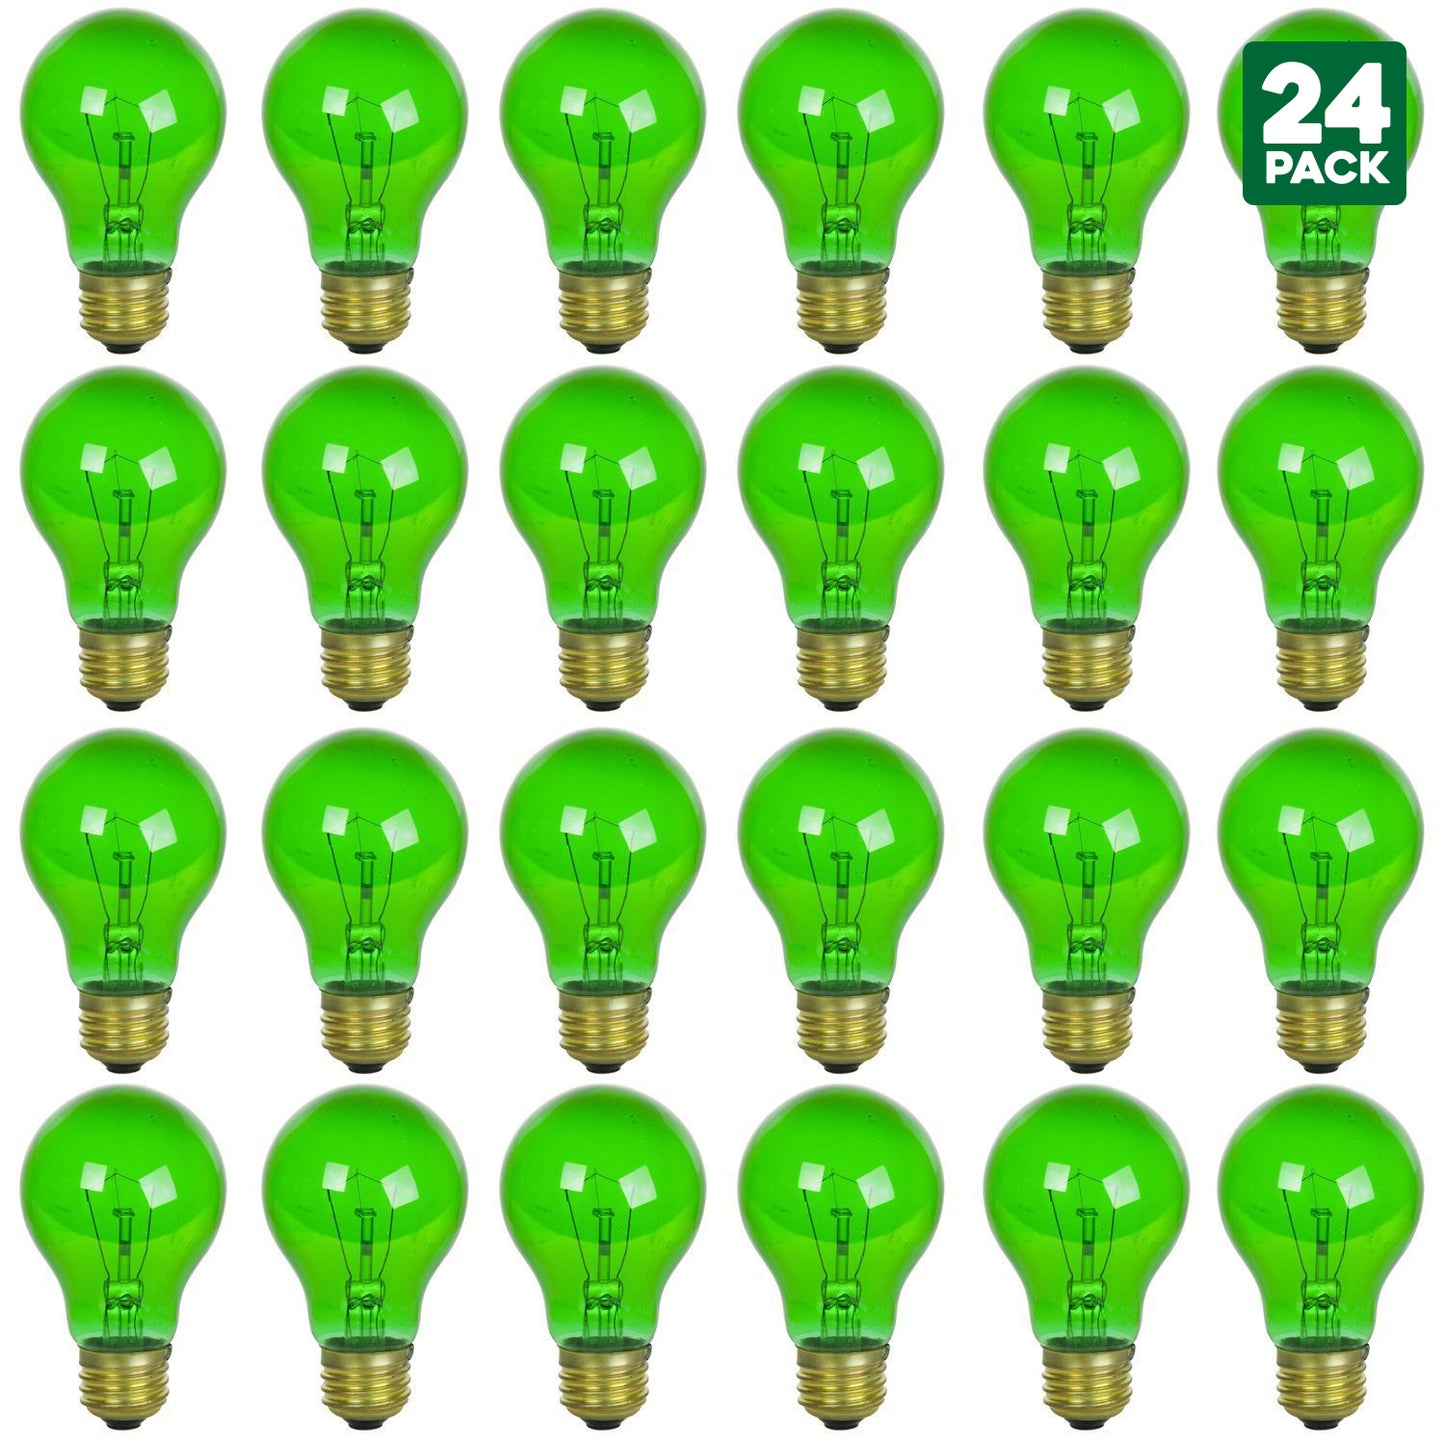 2 Pack of Sunlite 25 Watt A19 Colored, Medium Base, Transparent Green